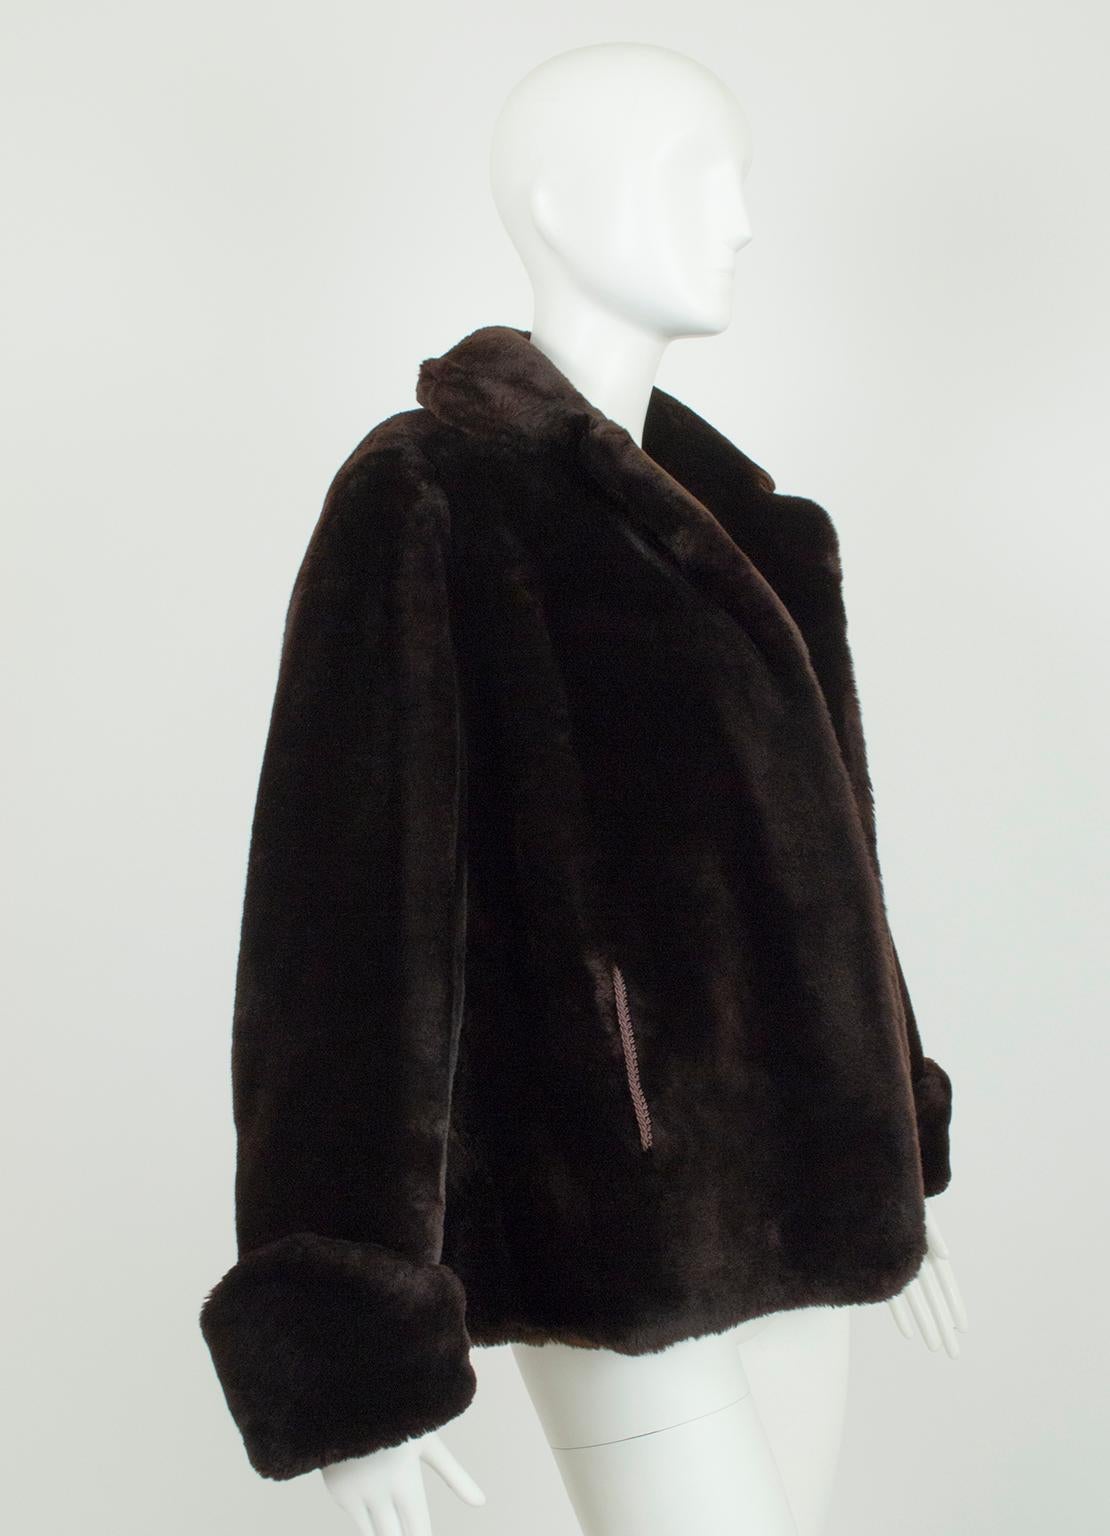 mouton jacket 1950s